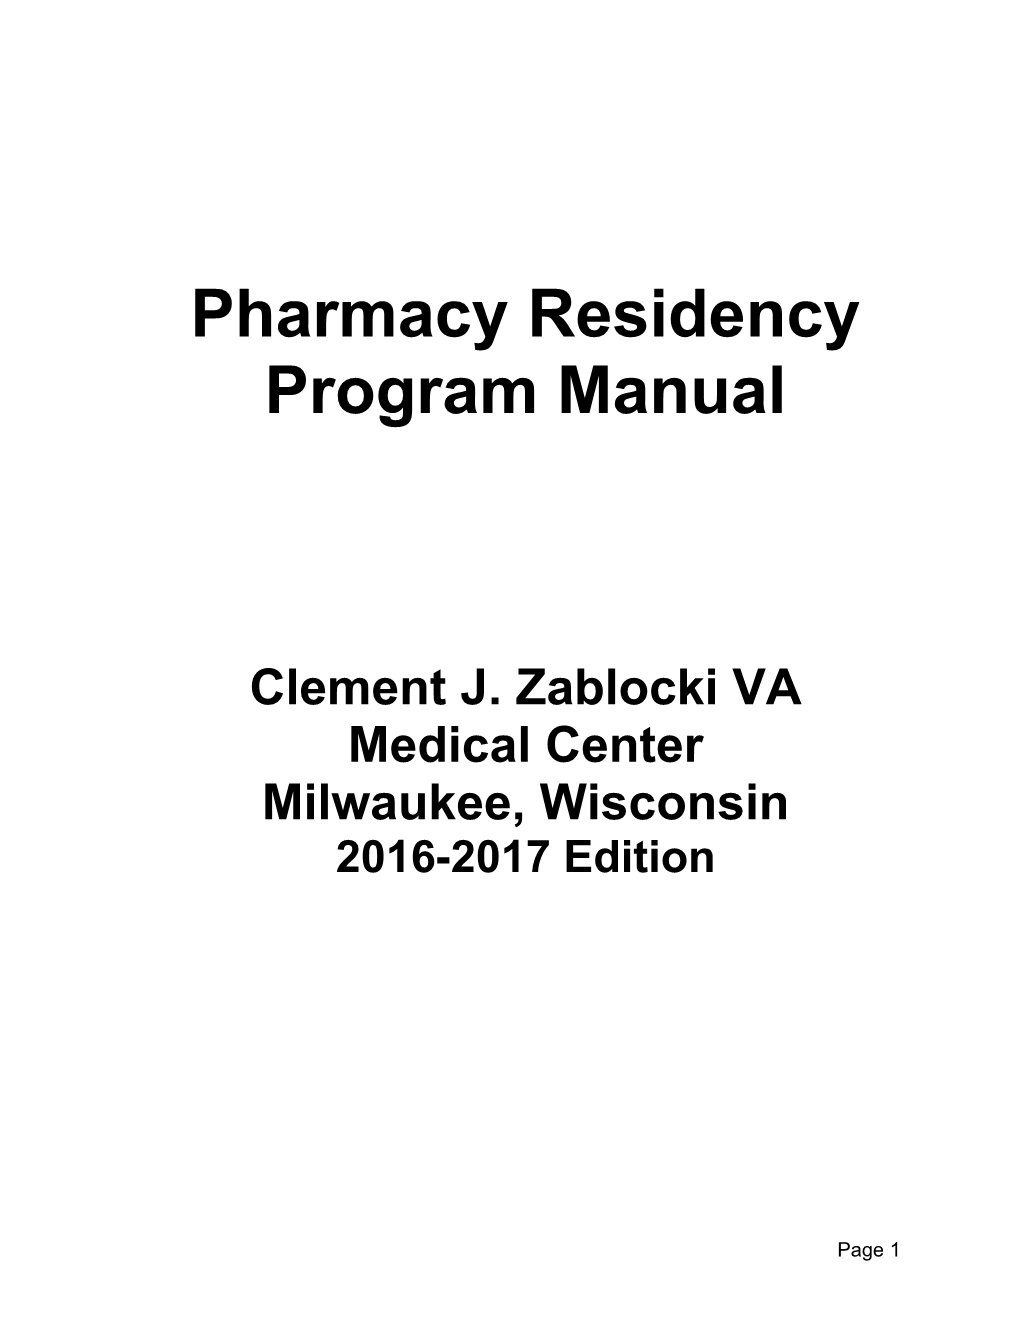 Pharmacy Residency Program Manual